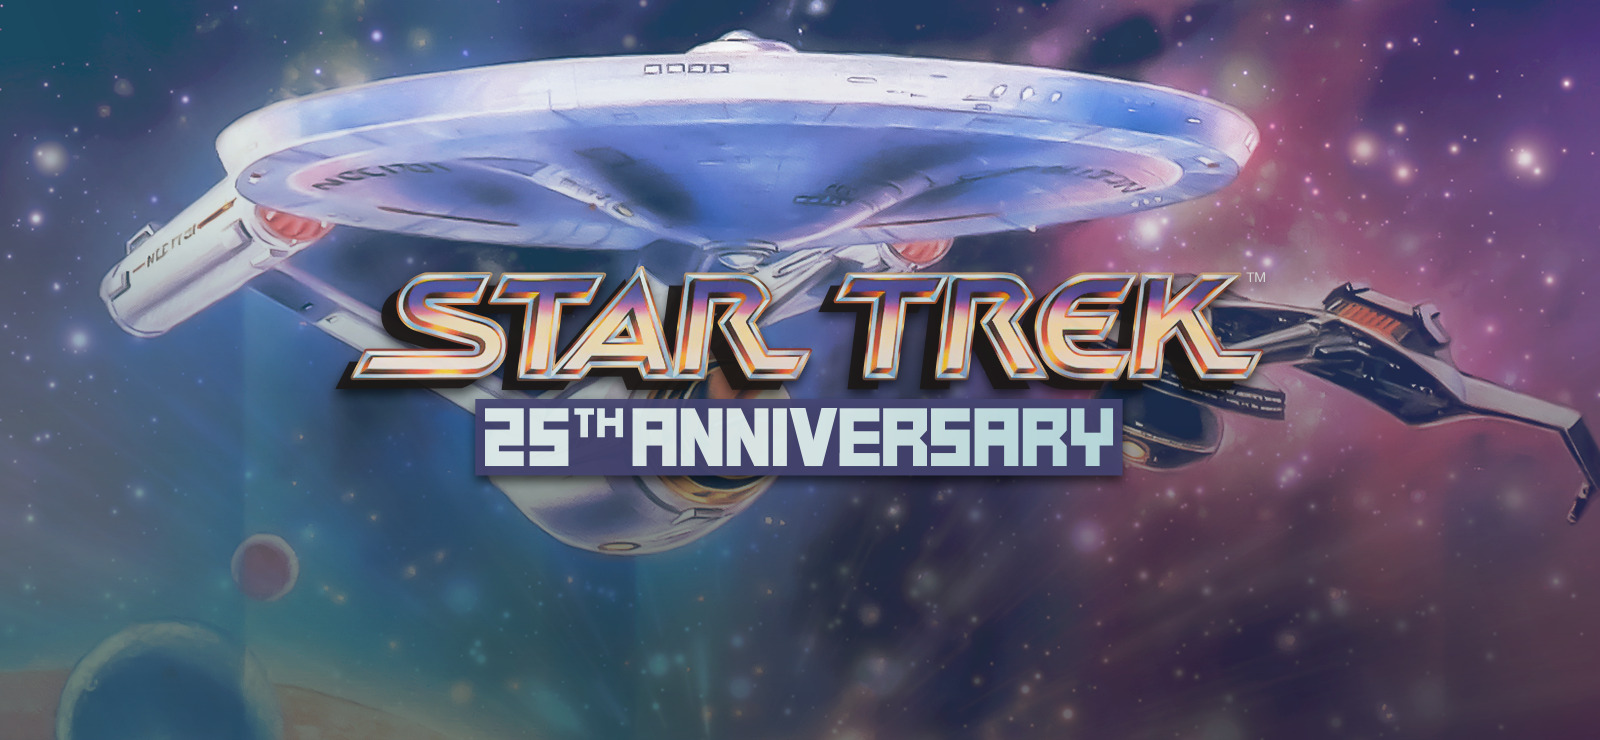 Star trek 25th anniversary poster